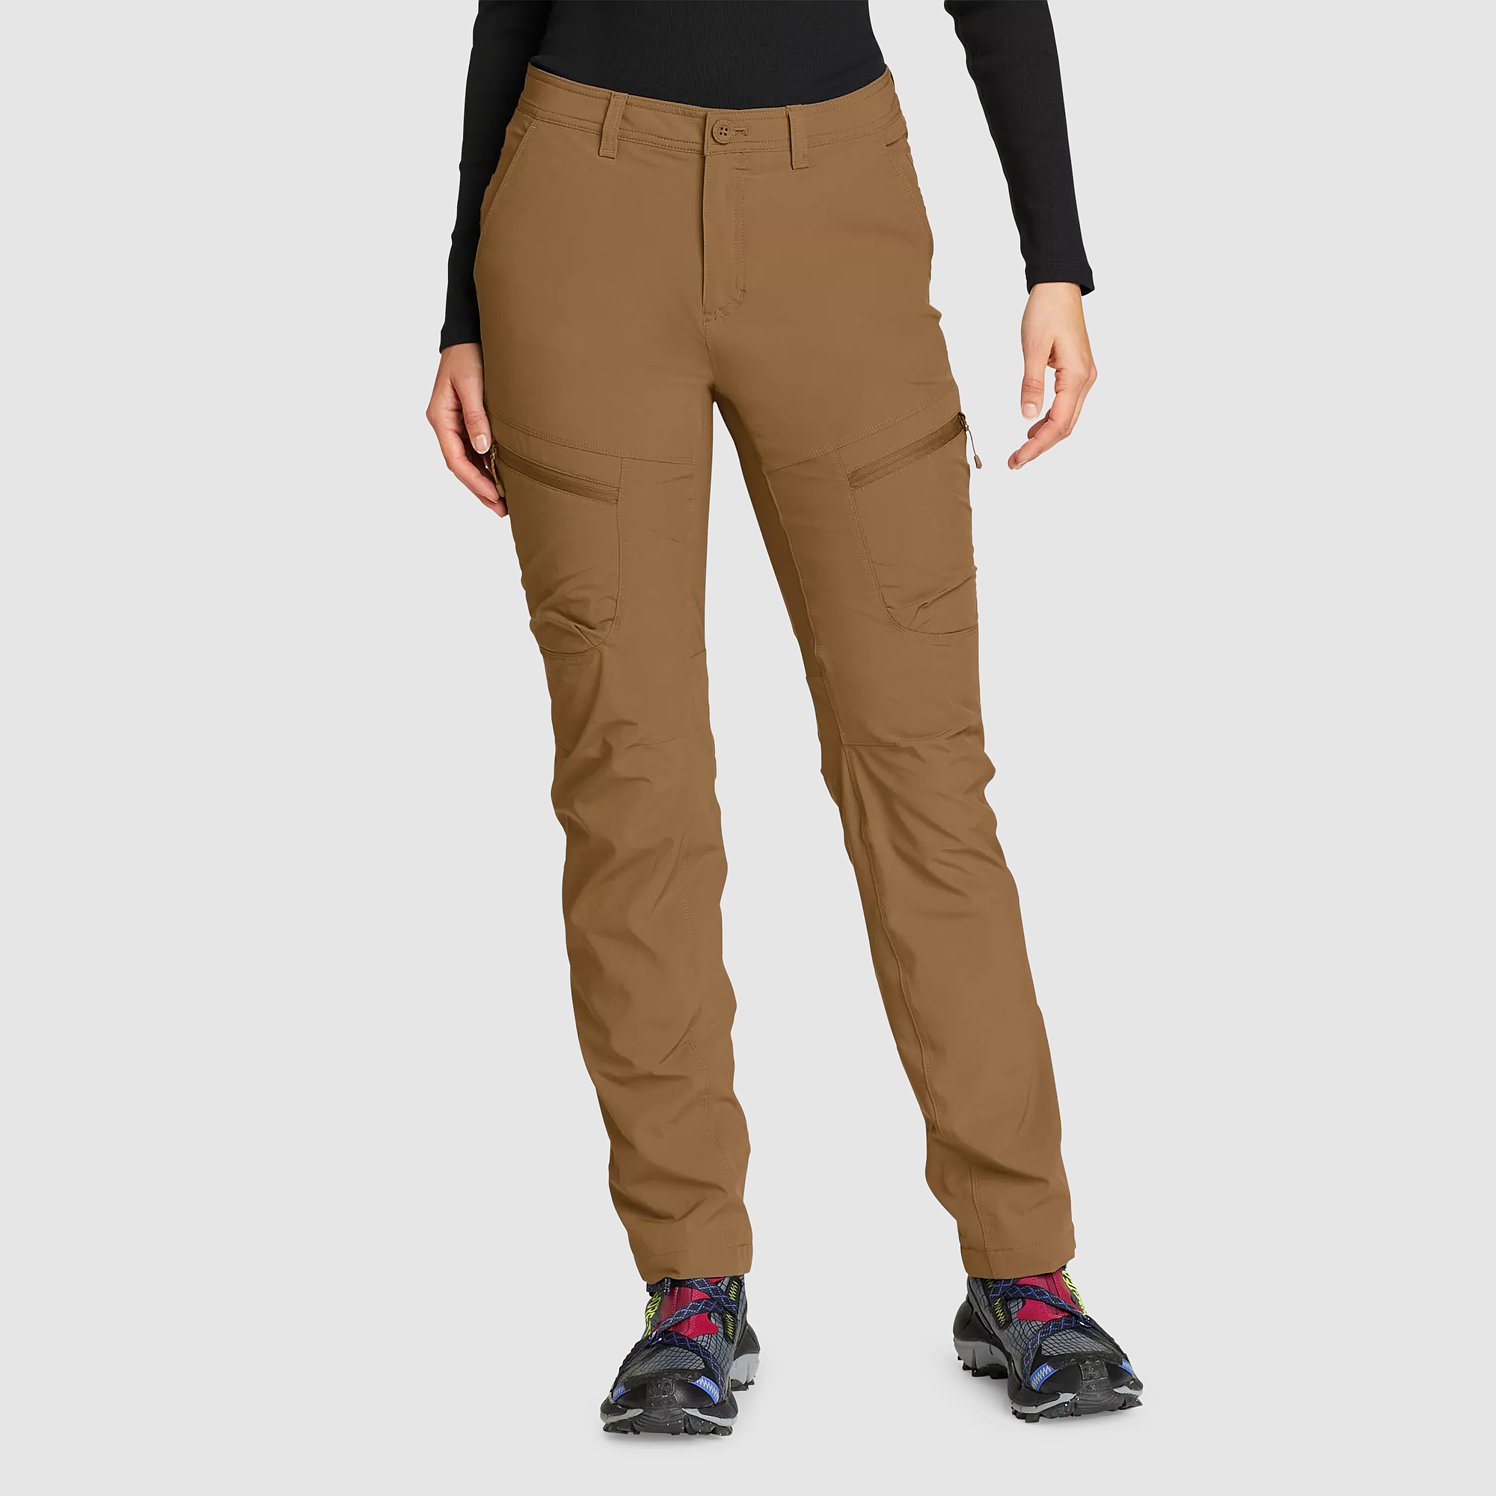 Eddie Bauer Womens Polar Lined Pants Black Size US 8 10 12 14 16